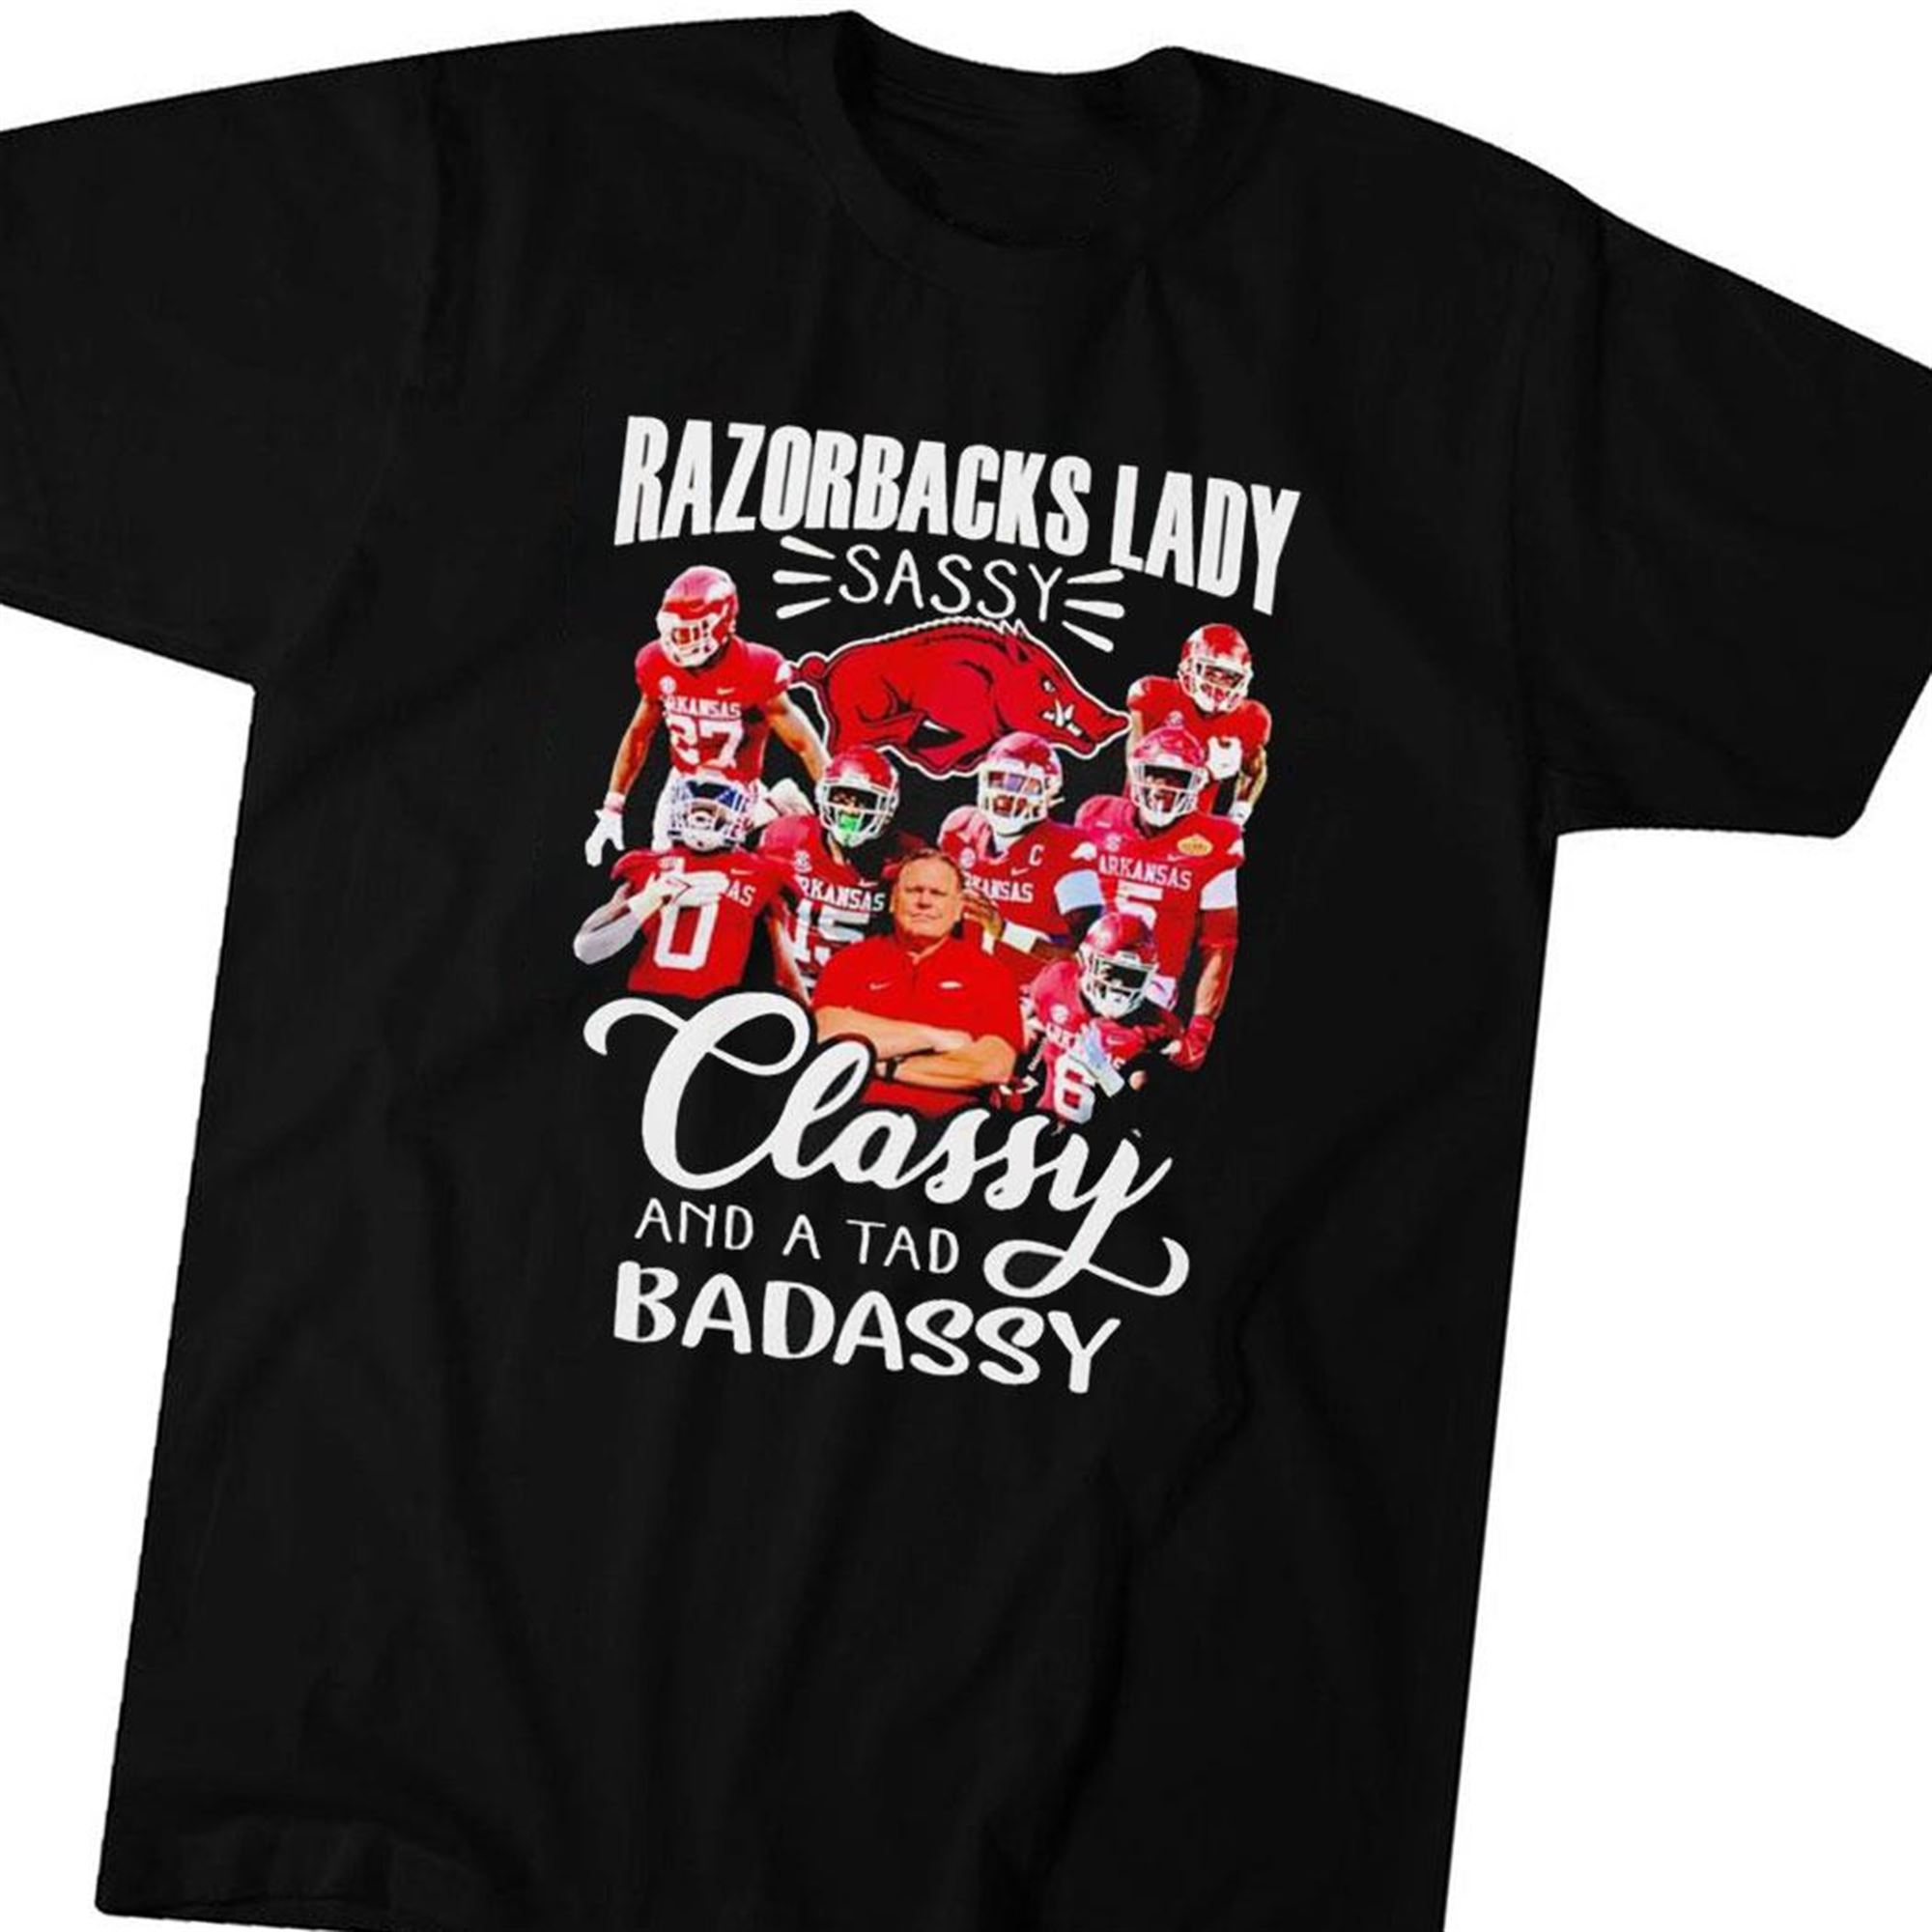 Official Razorbacks Lady Sassy Classy And A Tad Badass Shirt Ladies Tee